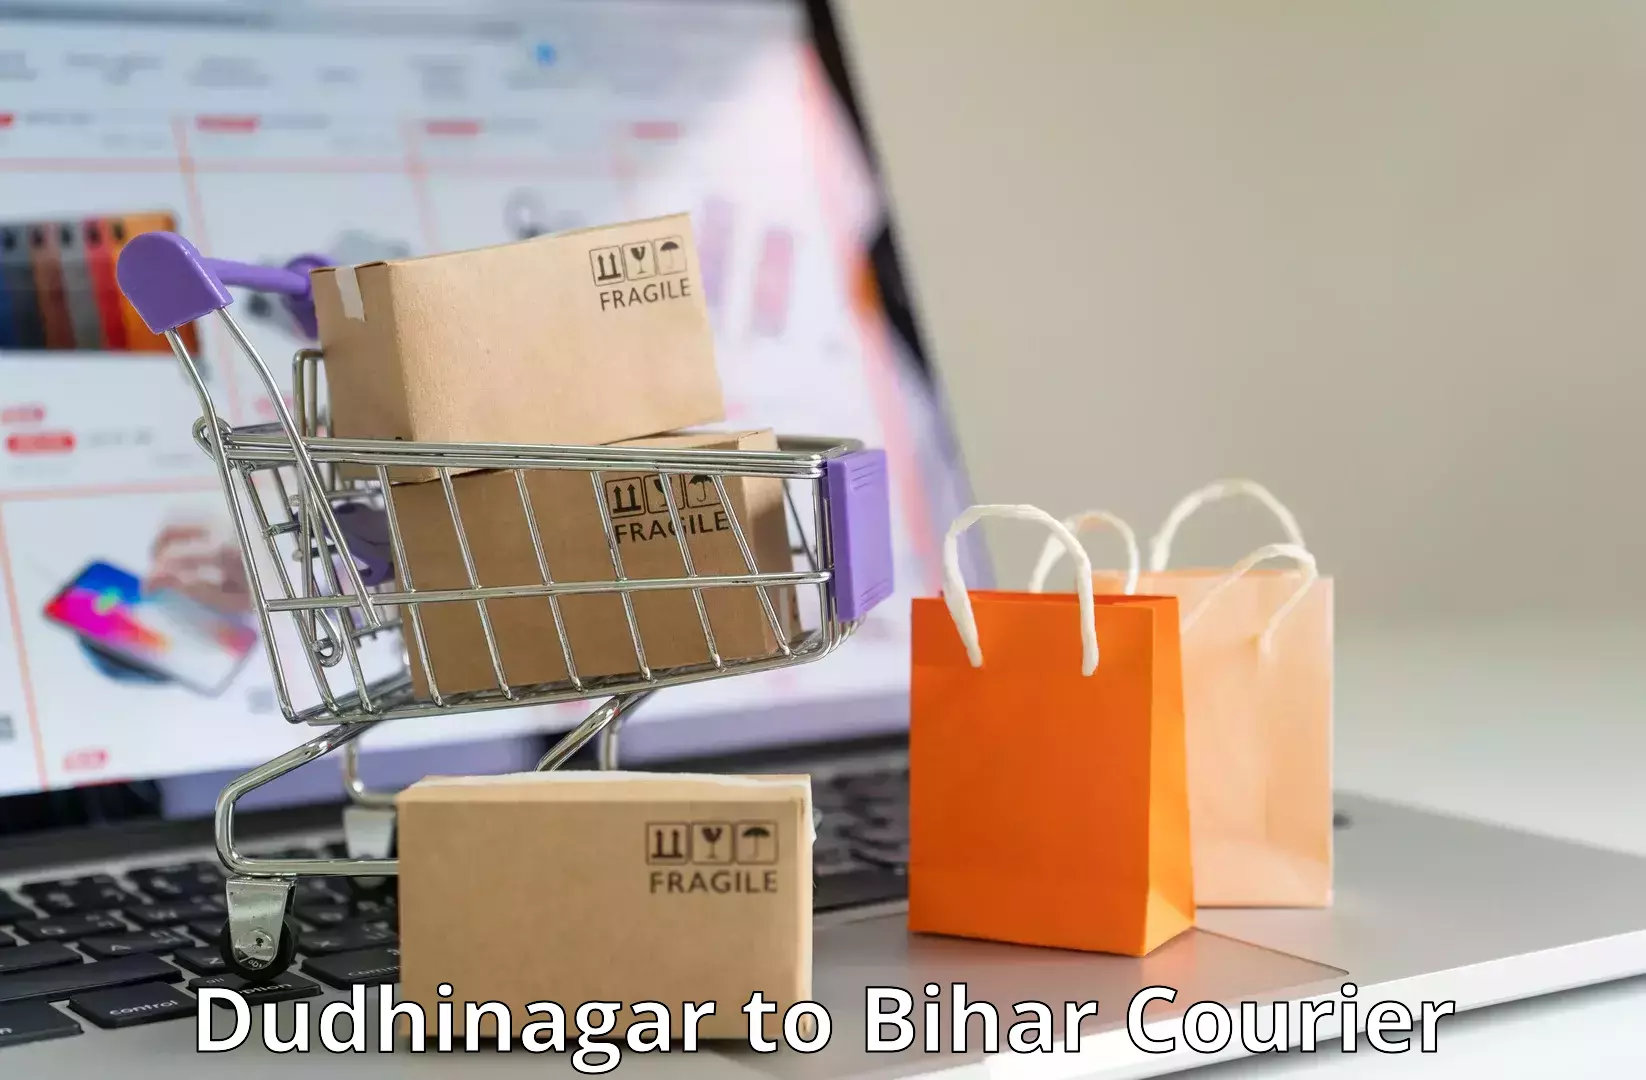 Supply chain efficiency Dudhinagar to Vaishali